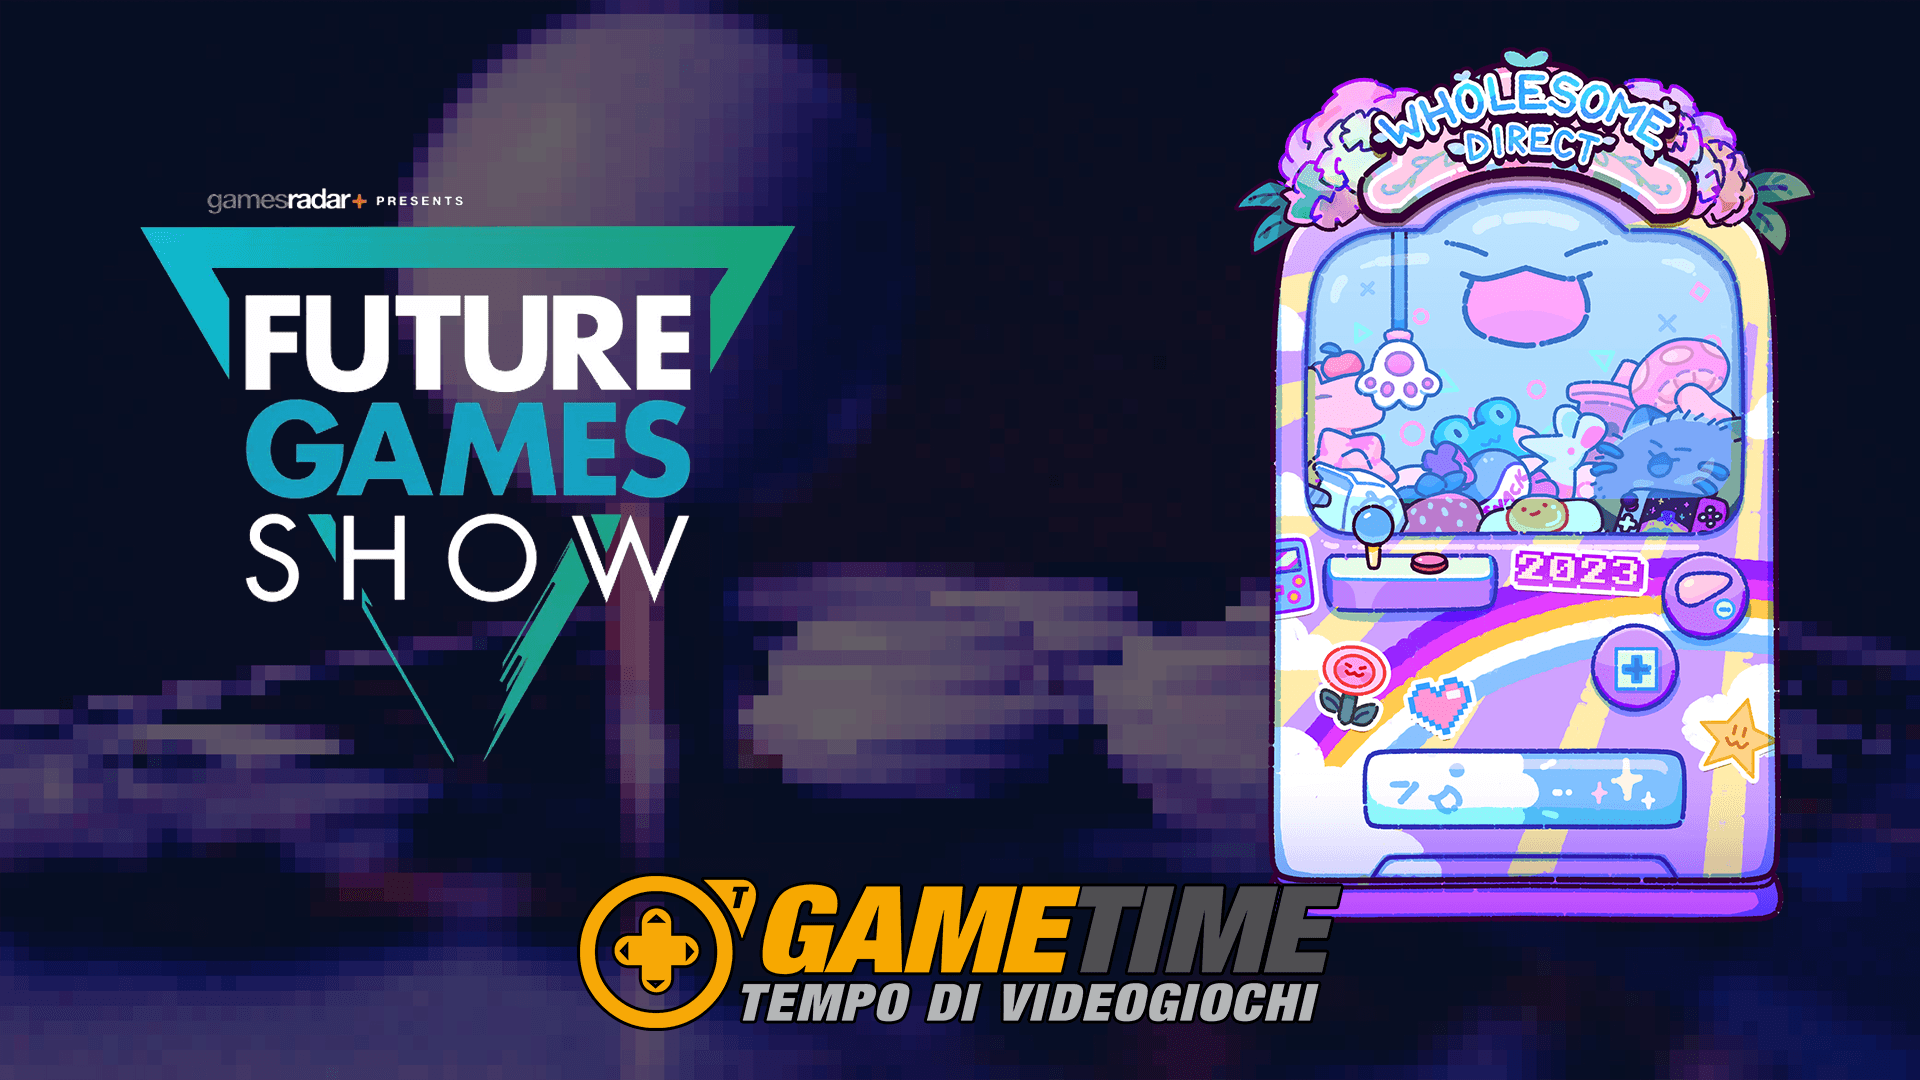 Future gaming show. Фьючер гейм шоу 2023. The Future games show ведущие. Games of the Future 2024 logo.